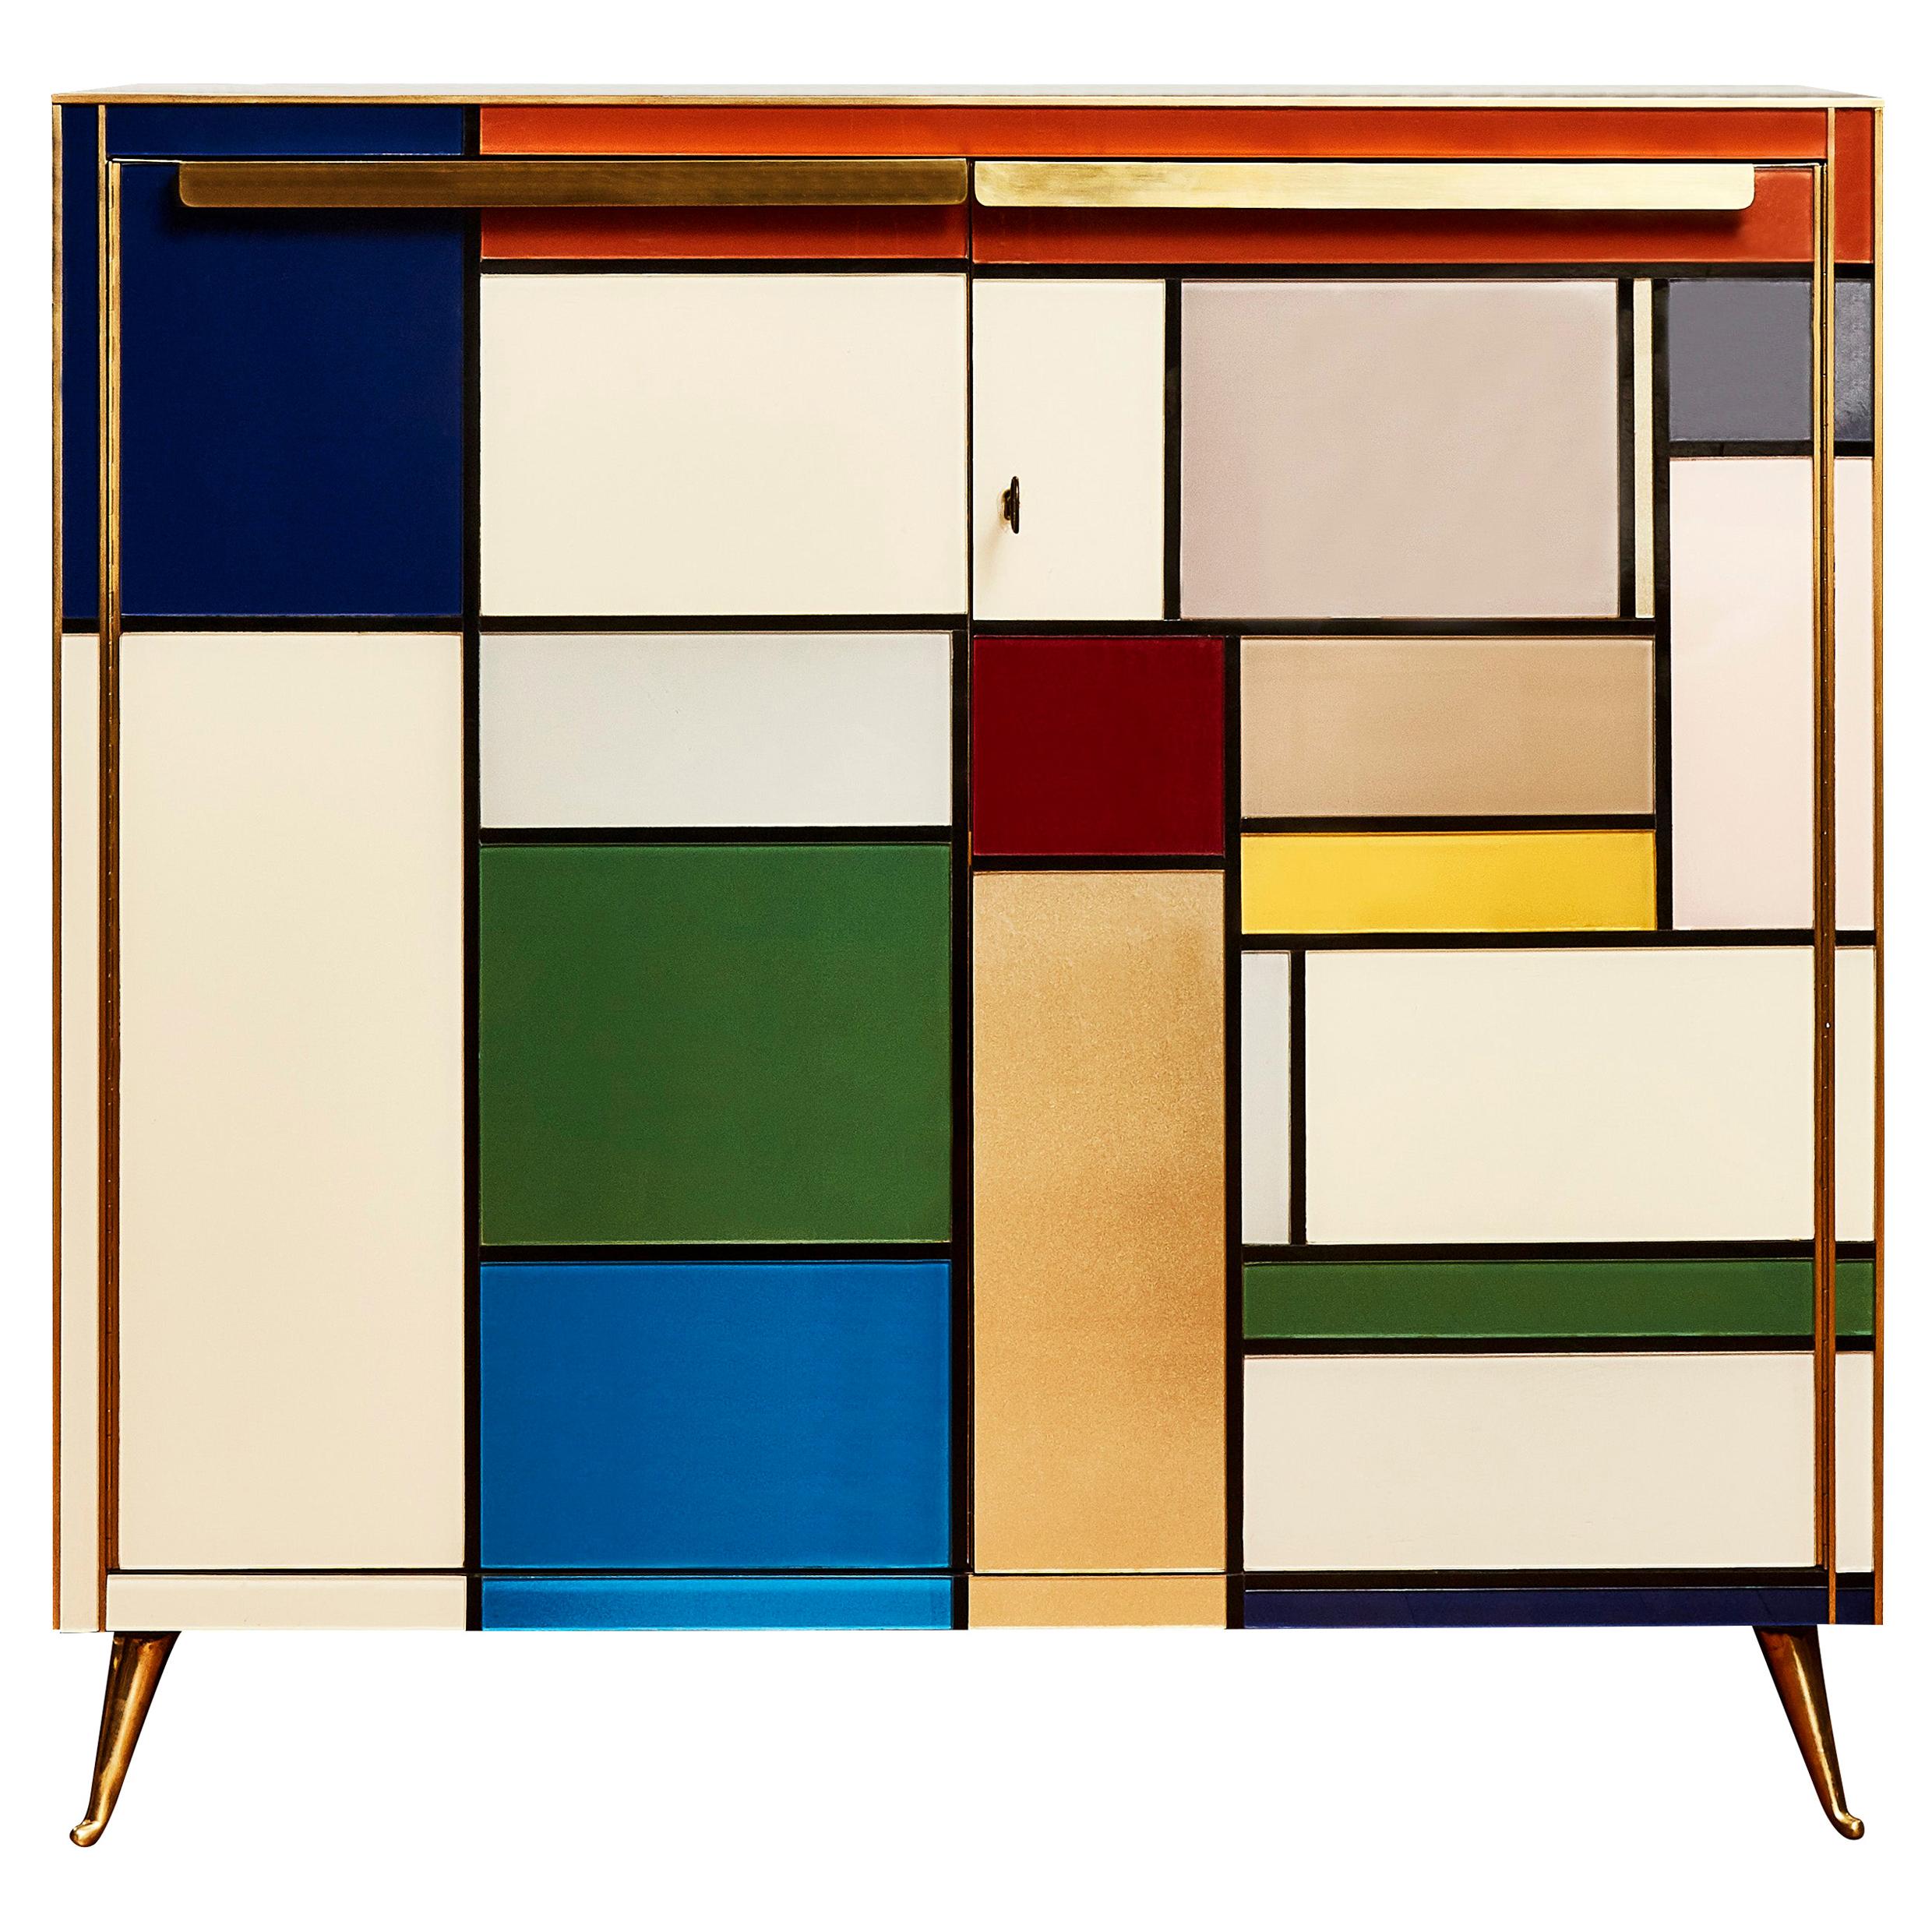 Cabinet "Mondrian Tribute" in Tainted Glass by Studio Glustin